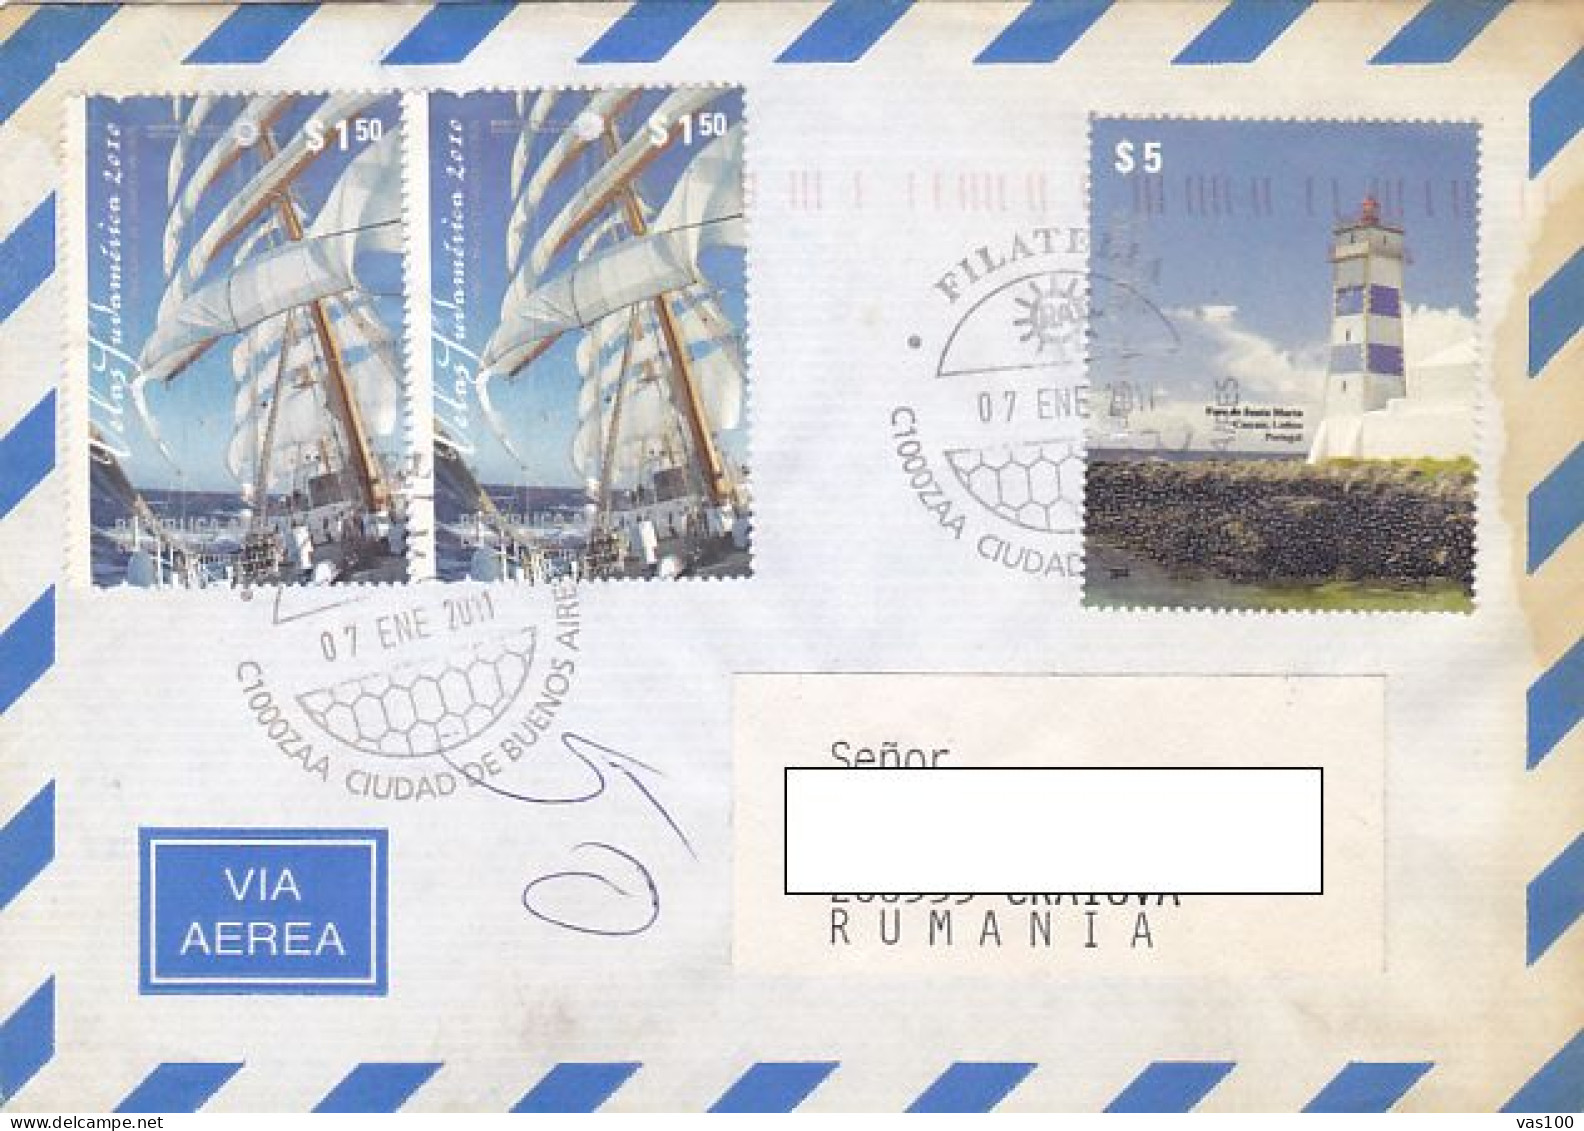 SHIP, SAILING VESSEL, LIGHTHOUSE, STAMPS ON COVER, 2011, ARGENTINA - Briefe U. Dokumente